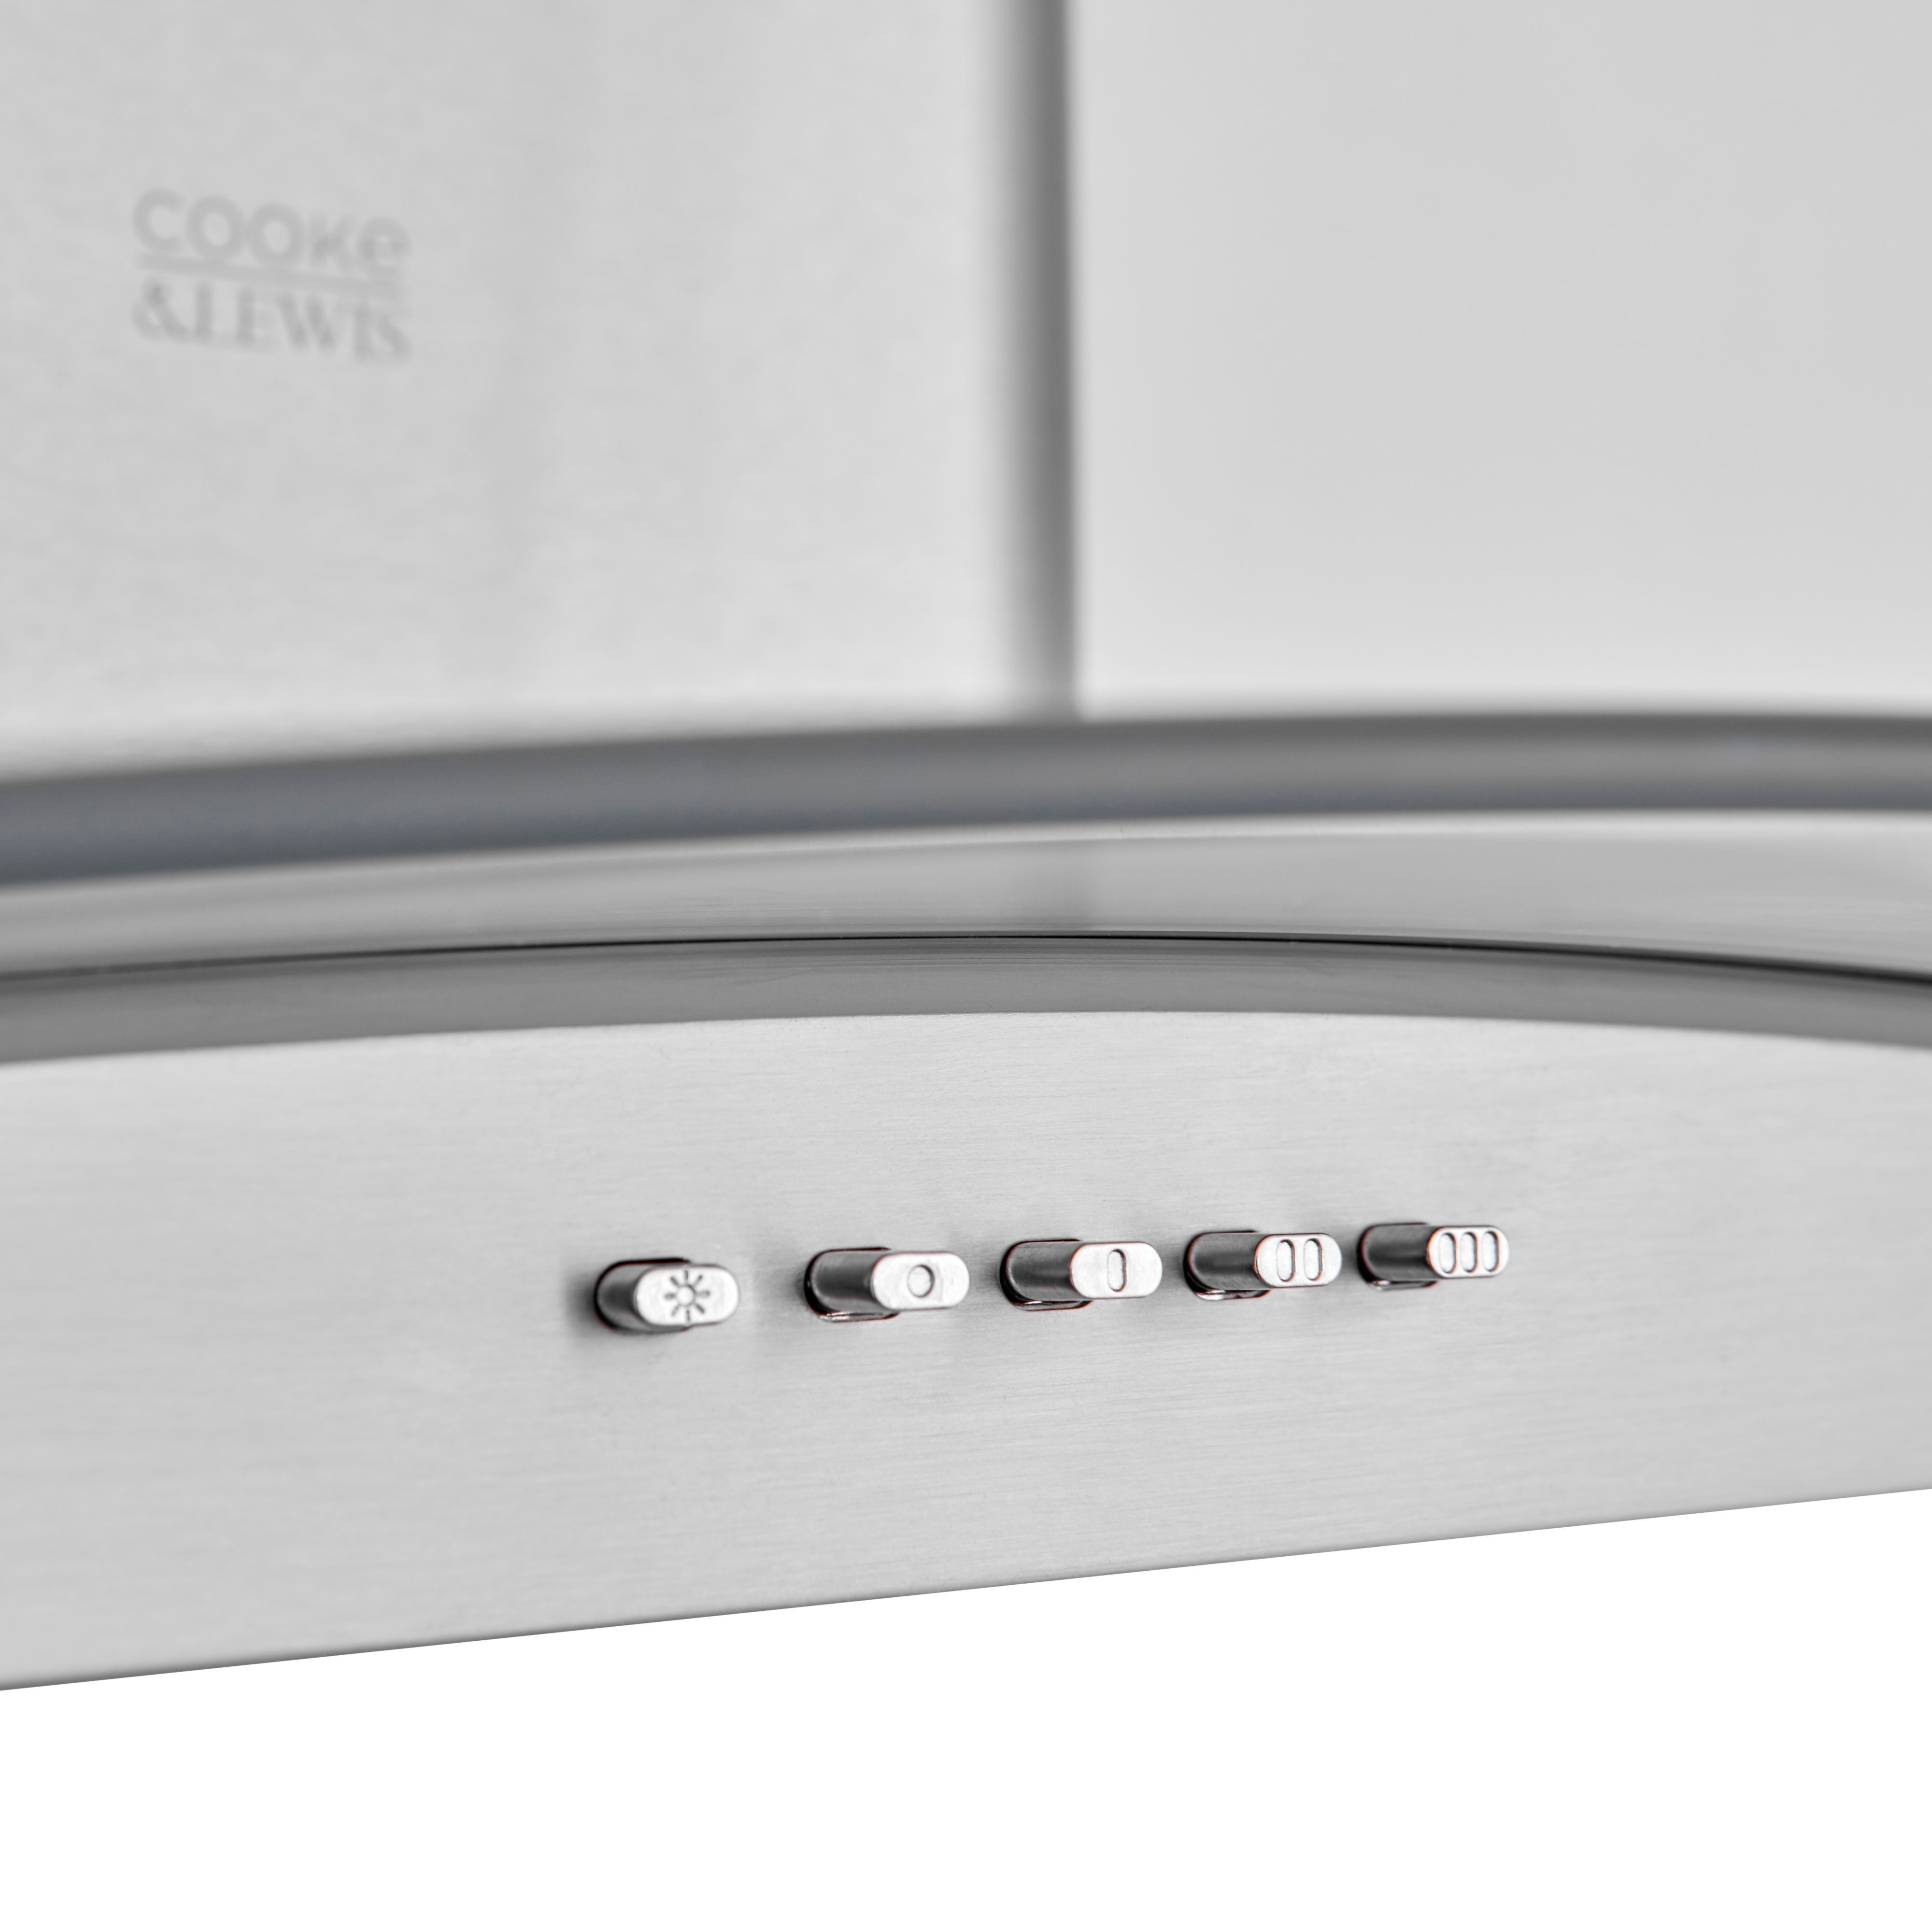 Cooke & Lewis CLCGS60 Stainless steel Curved Cooker hood (W)60cm - Inox